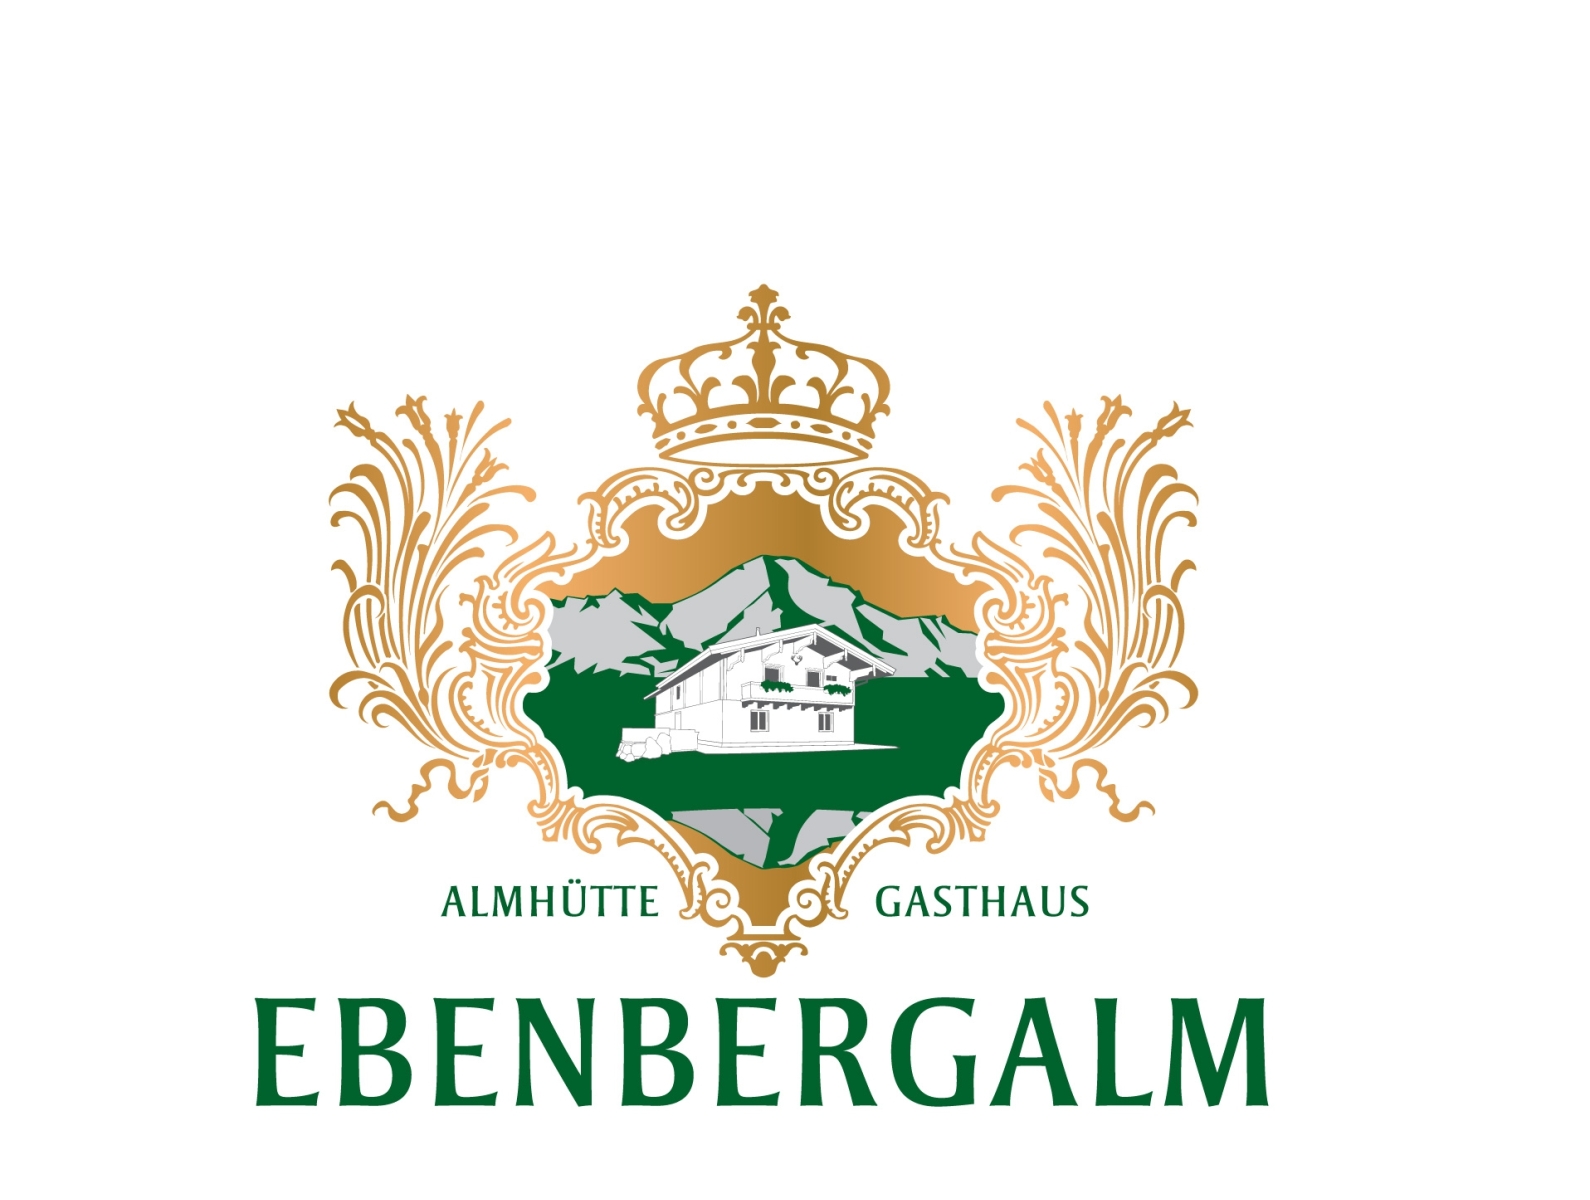 Ebenbergalm logo custom logo design design logo graphic design graphics design logo logo creator logo maker ui versatile